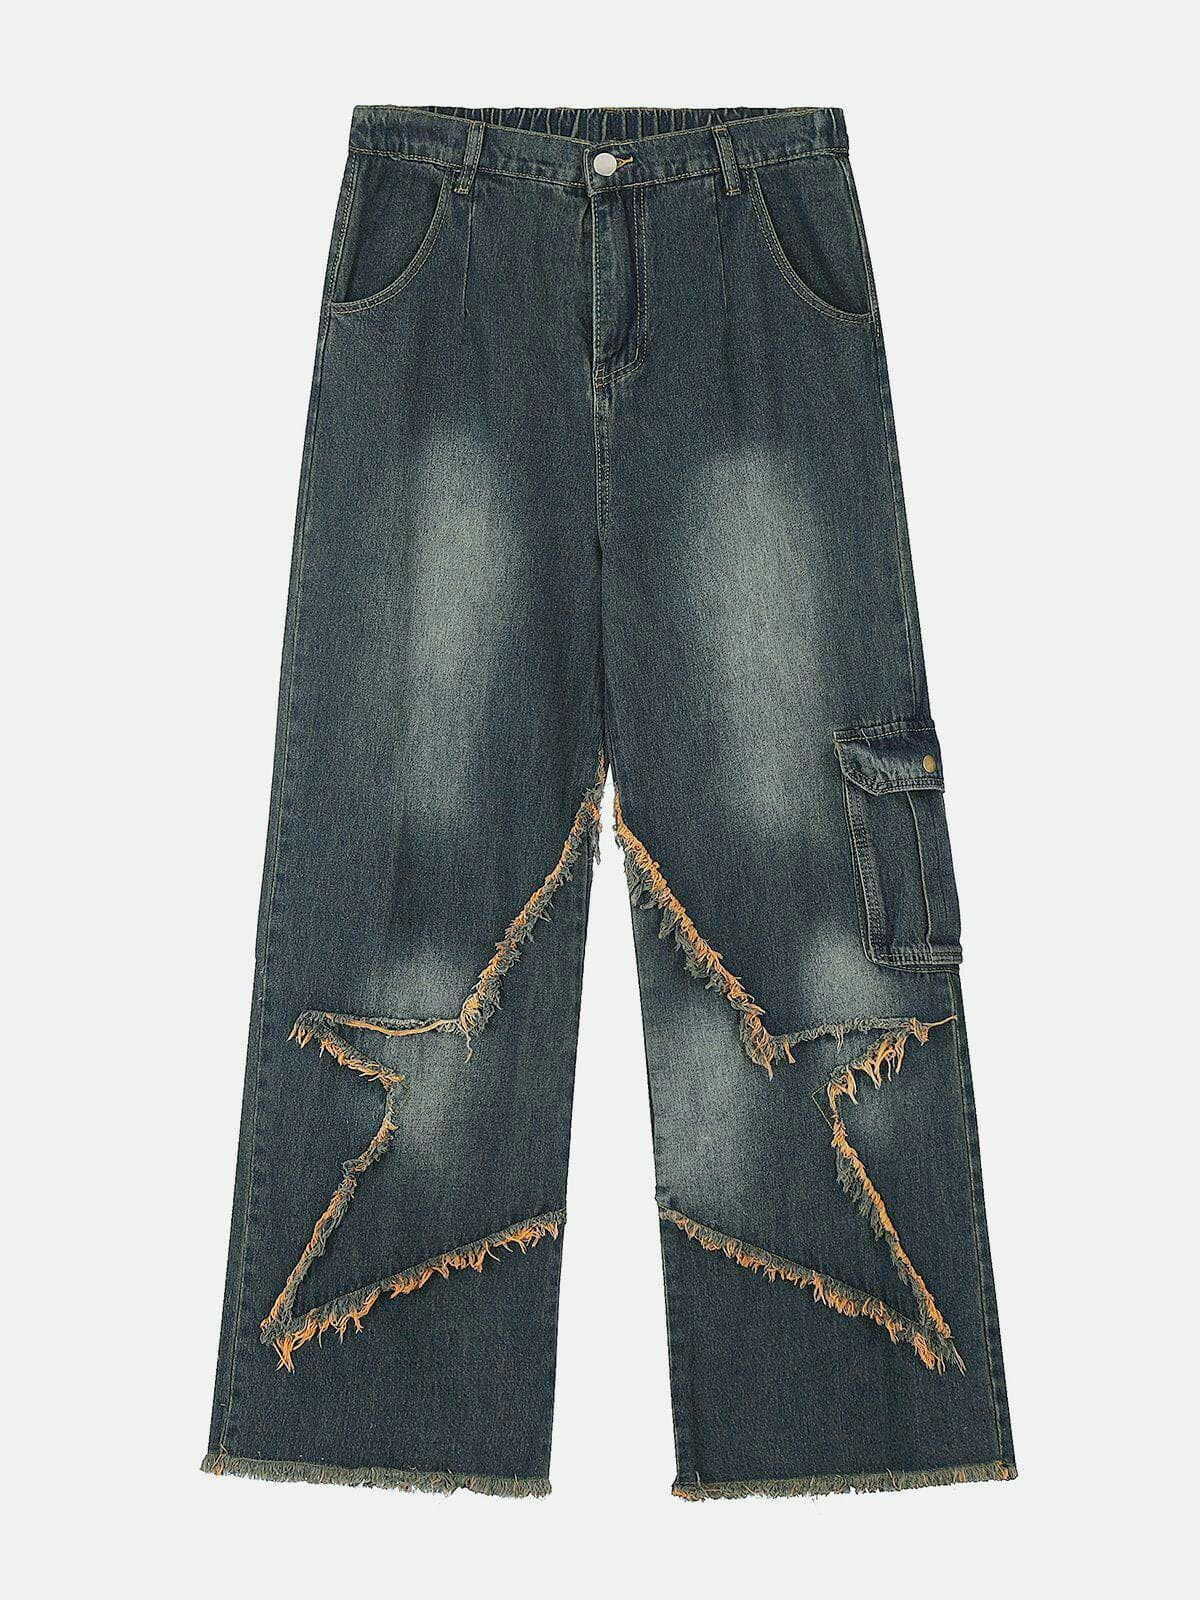 retro fringe loose jeans [edgy] 3933